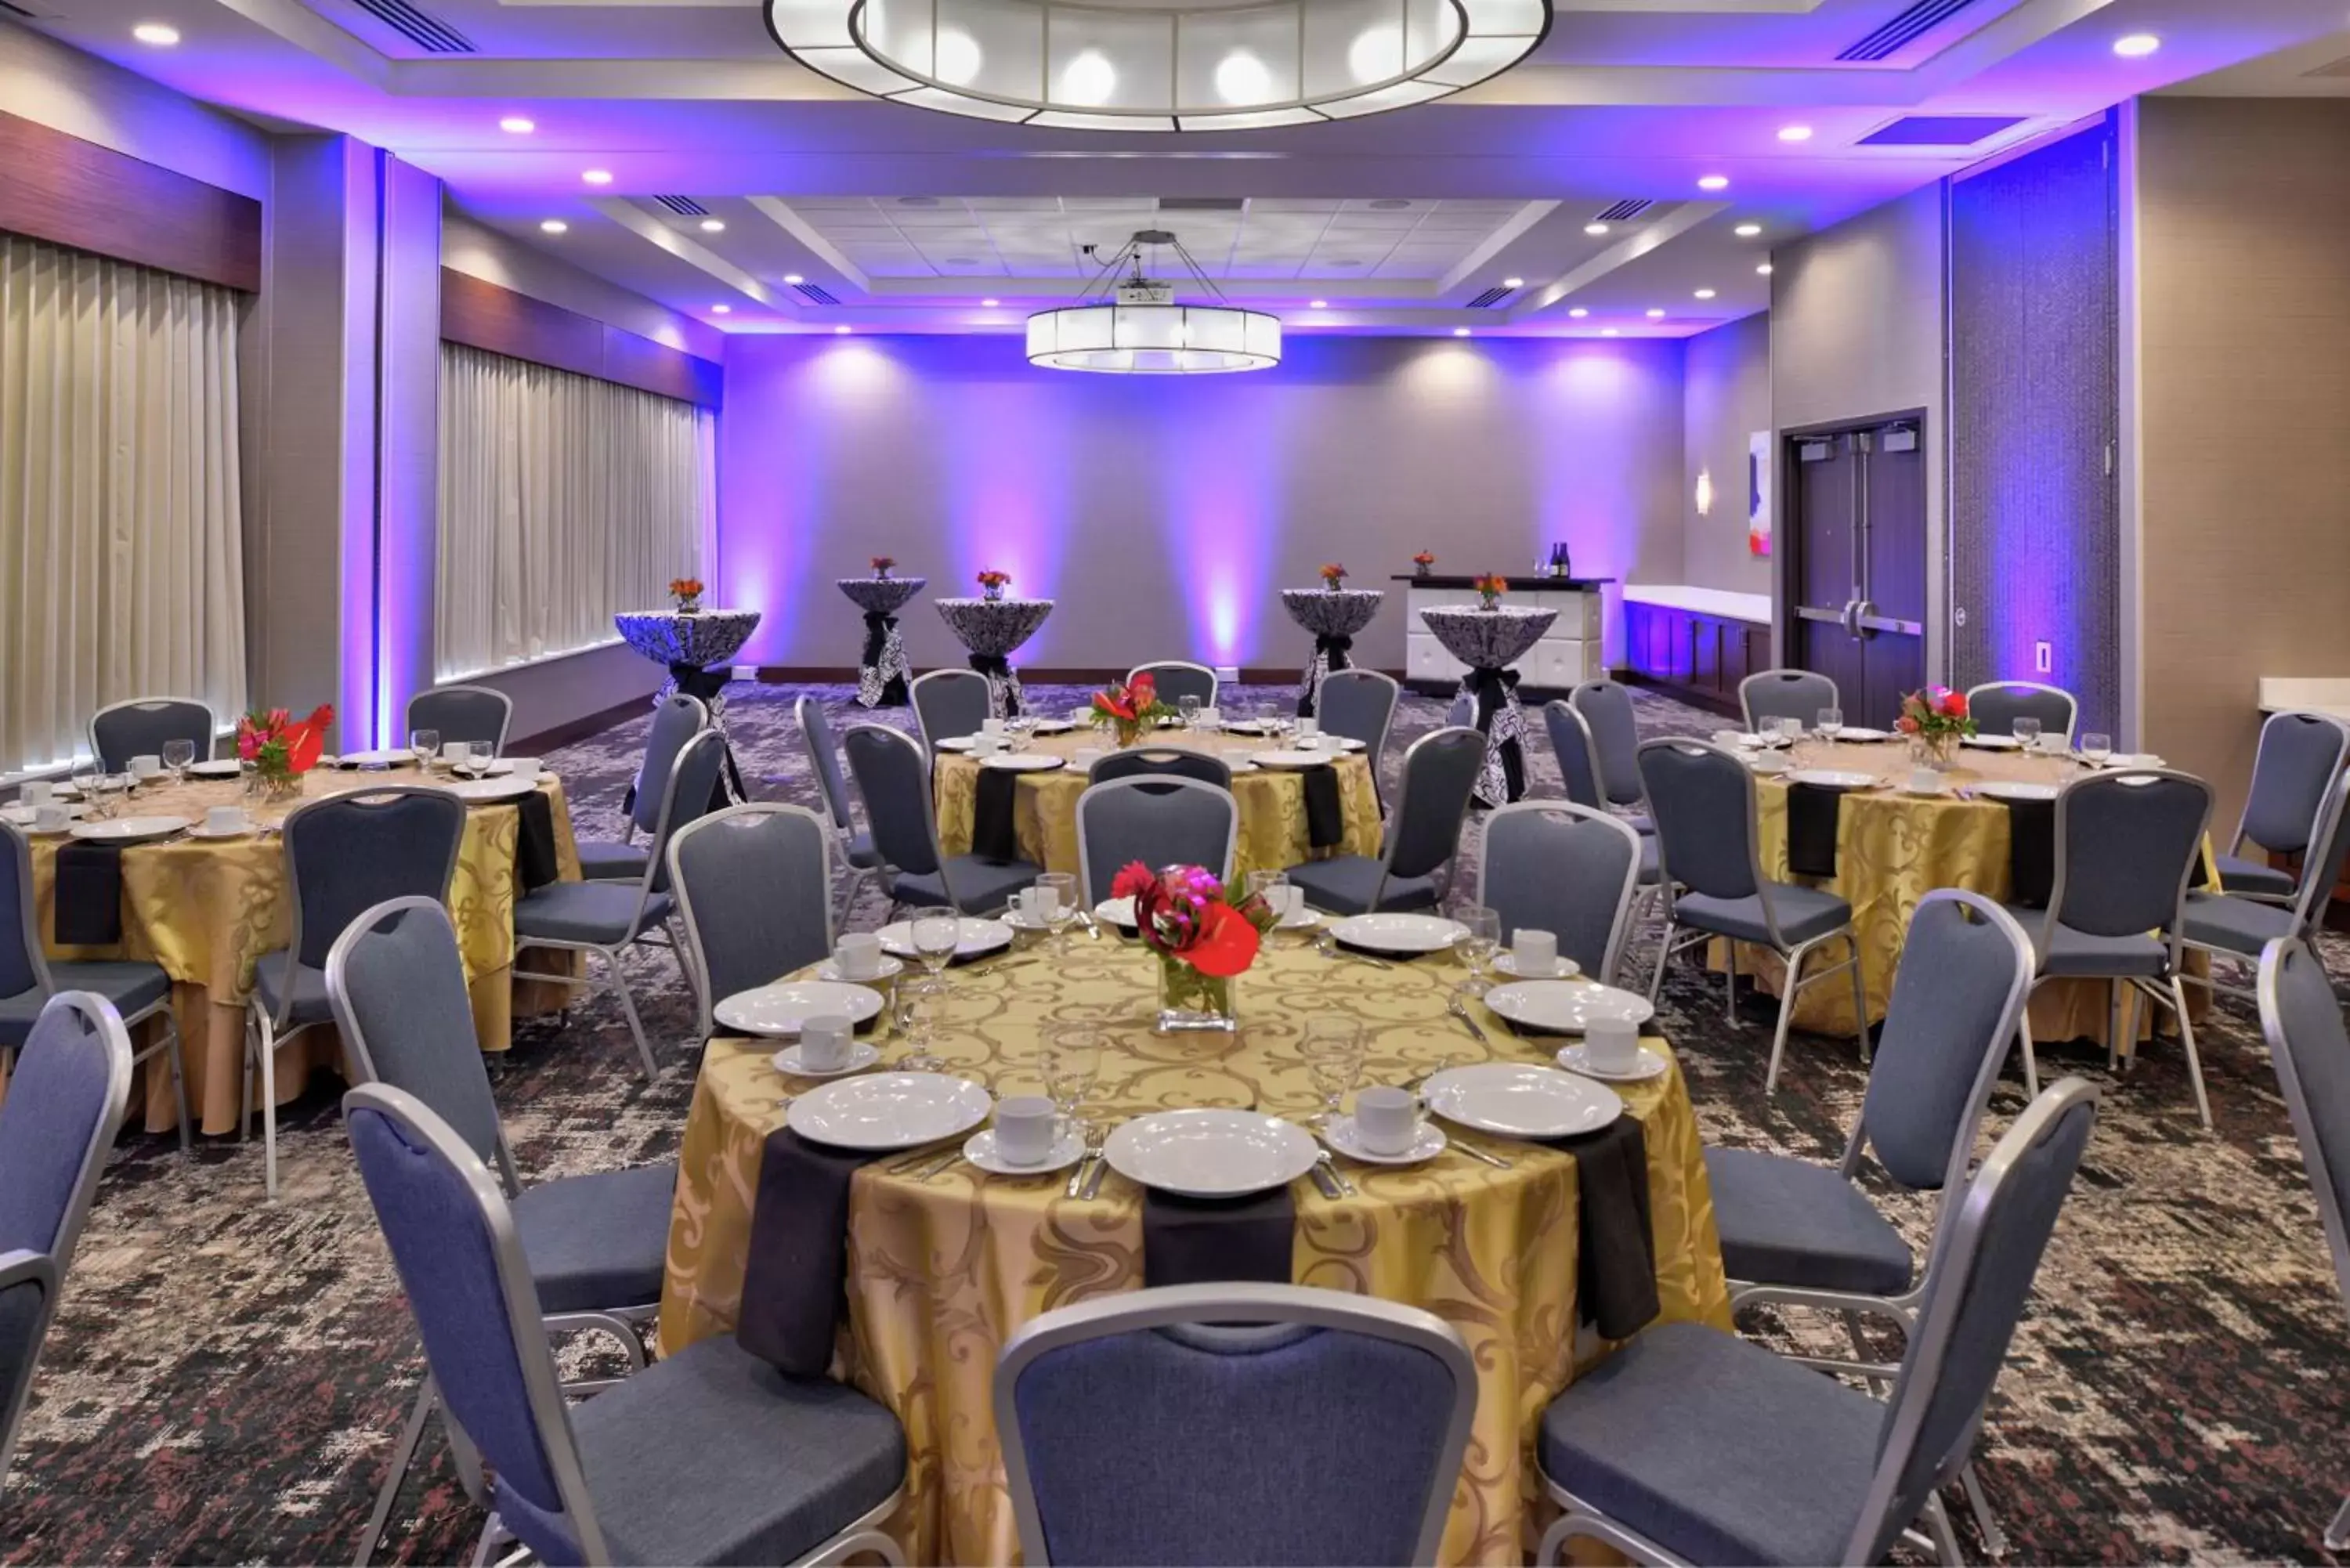 Meeting/conference room, Banquet Facilities in Hilton Garden Inn Little Rock Downtown